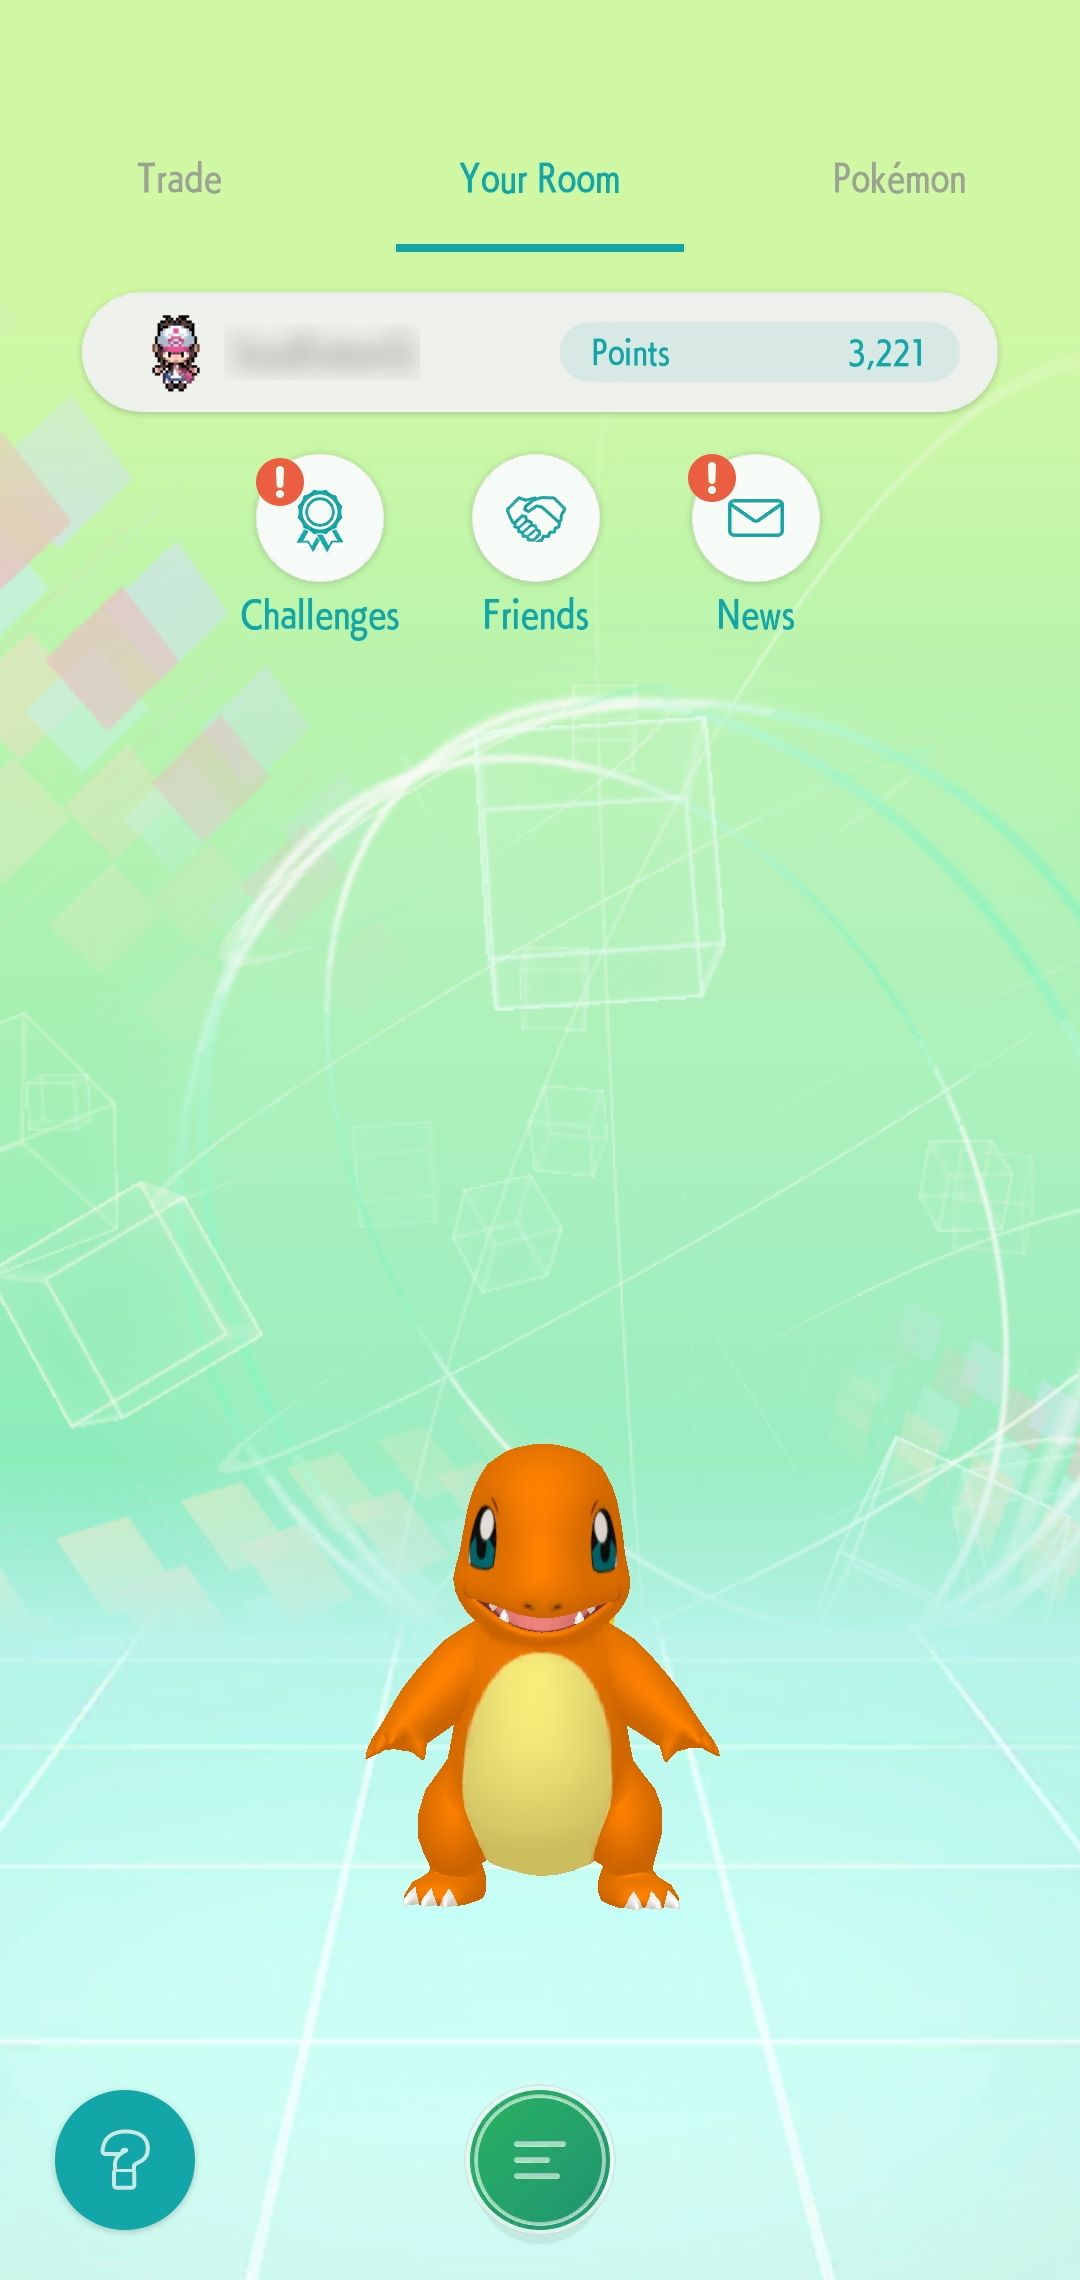 Screenshot of the Pokemon Home app's home screen